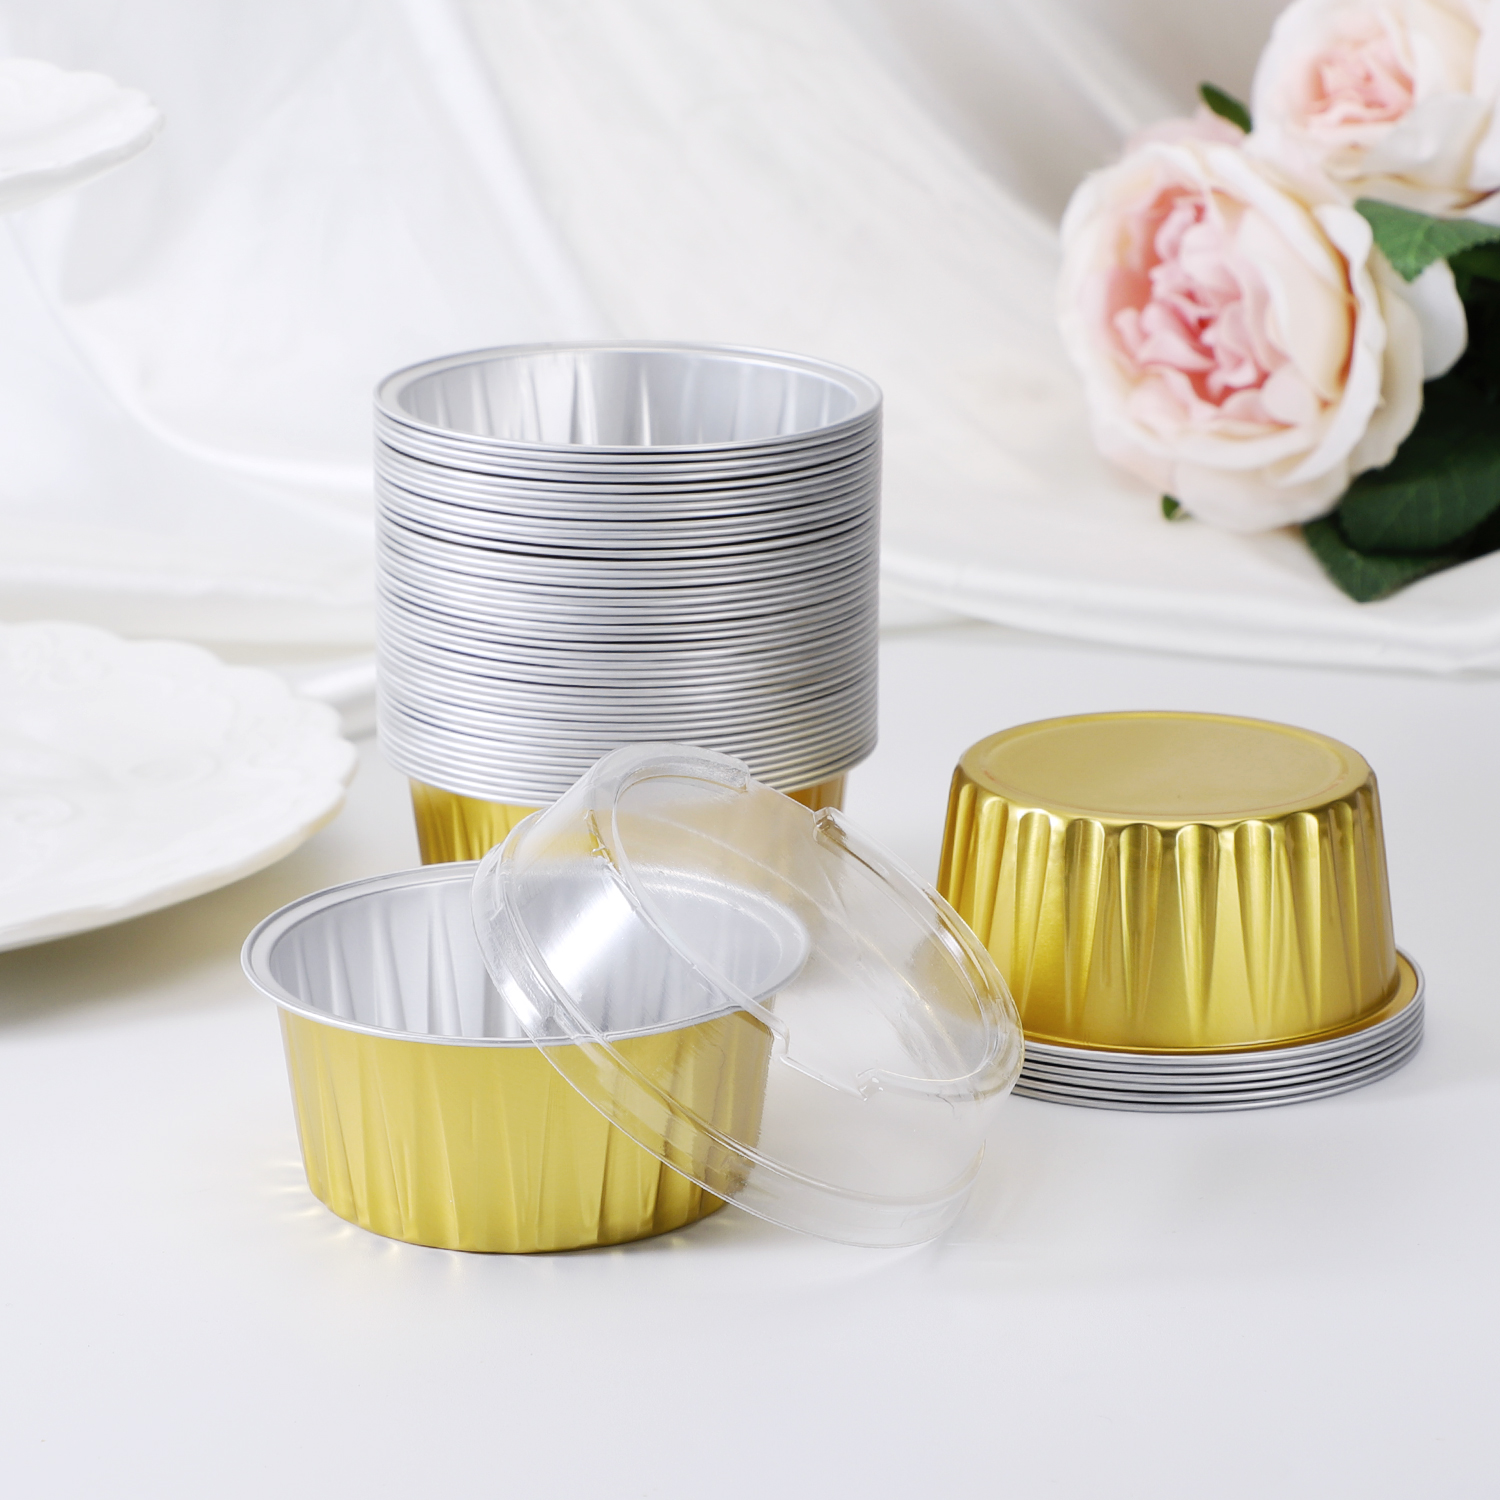 DEAYOU 100 Pieces Aluminum Foil Baking Cups with Lids, 5oz Disposable  Ramekins Muffin Cups, 3 Cupcake Foil Liners Tart Pie Tin Pan Holder for